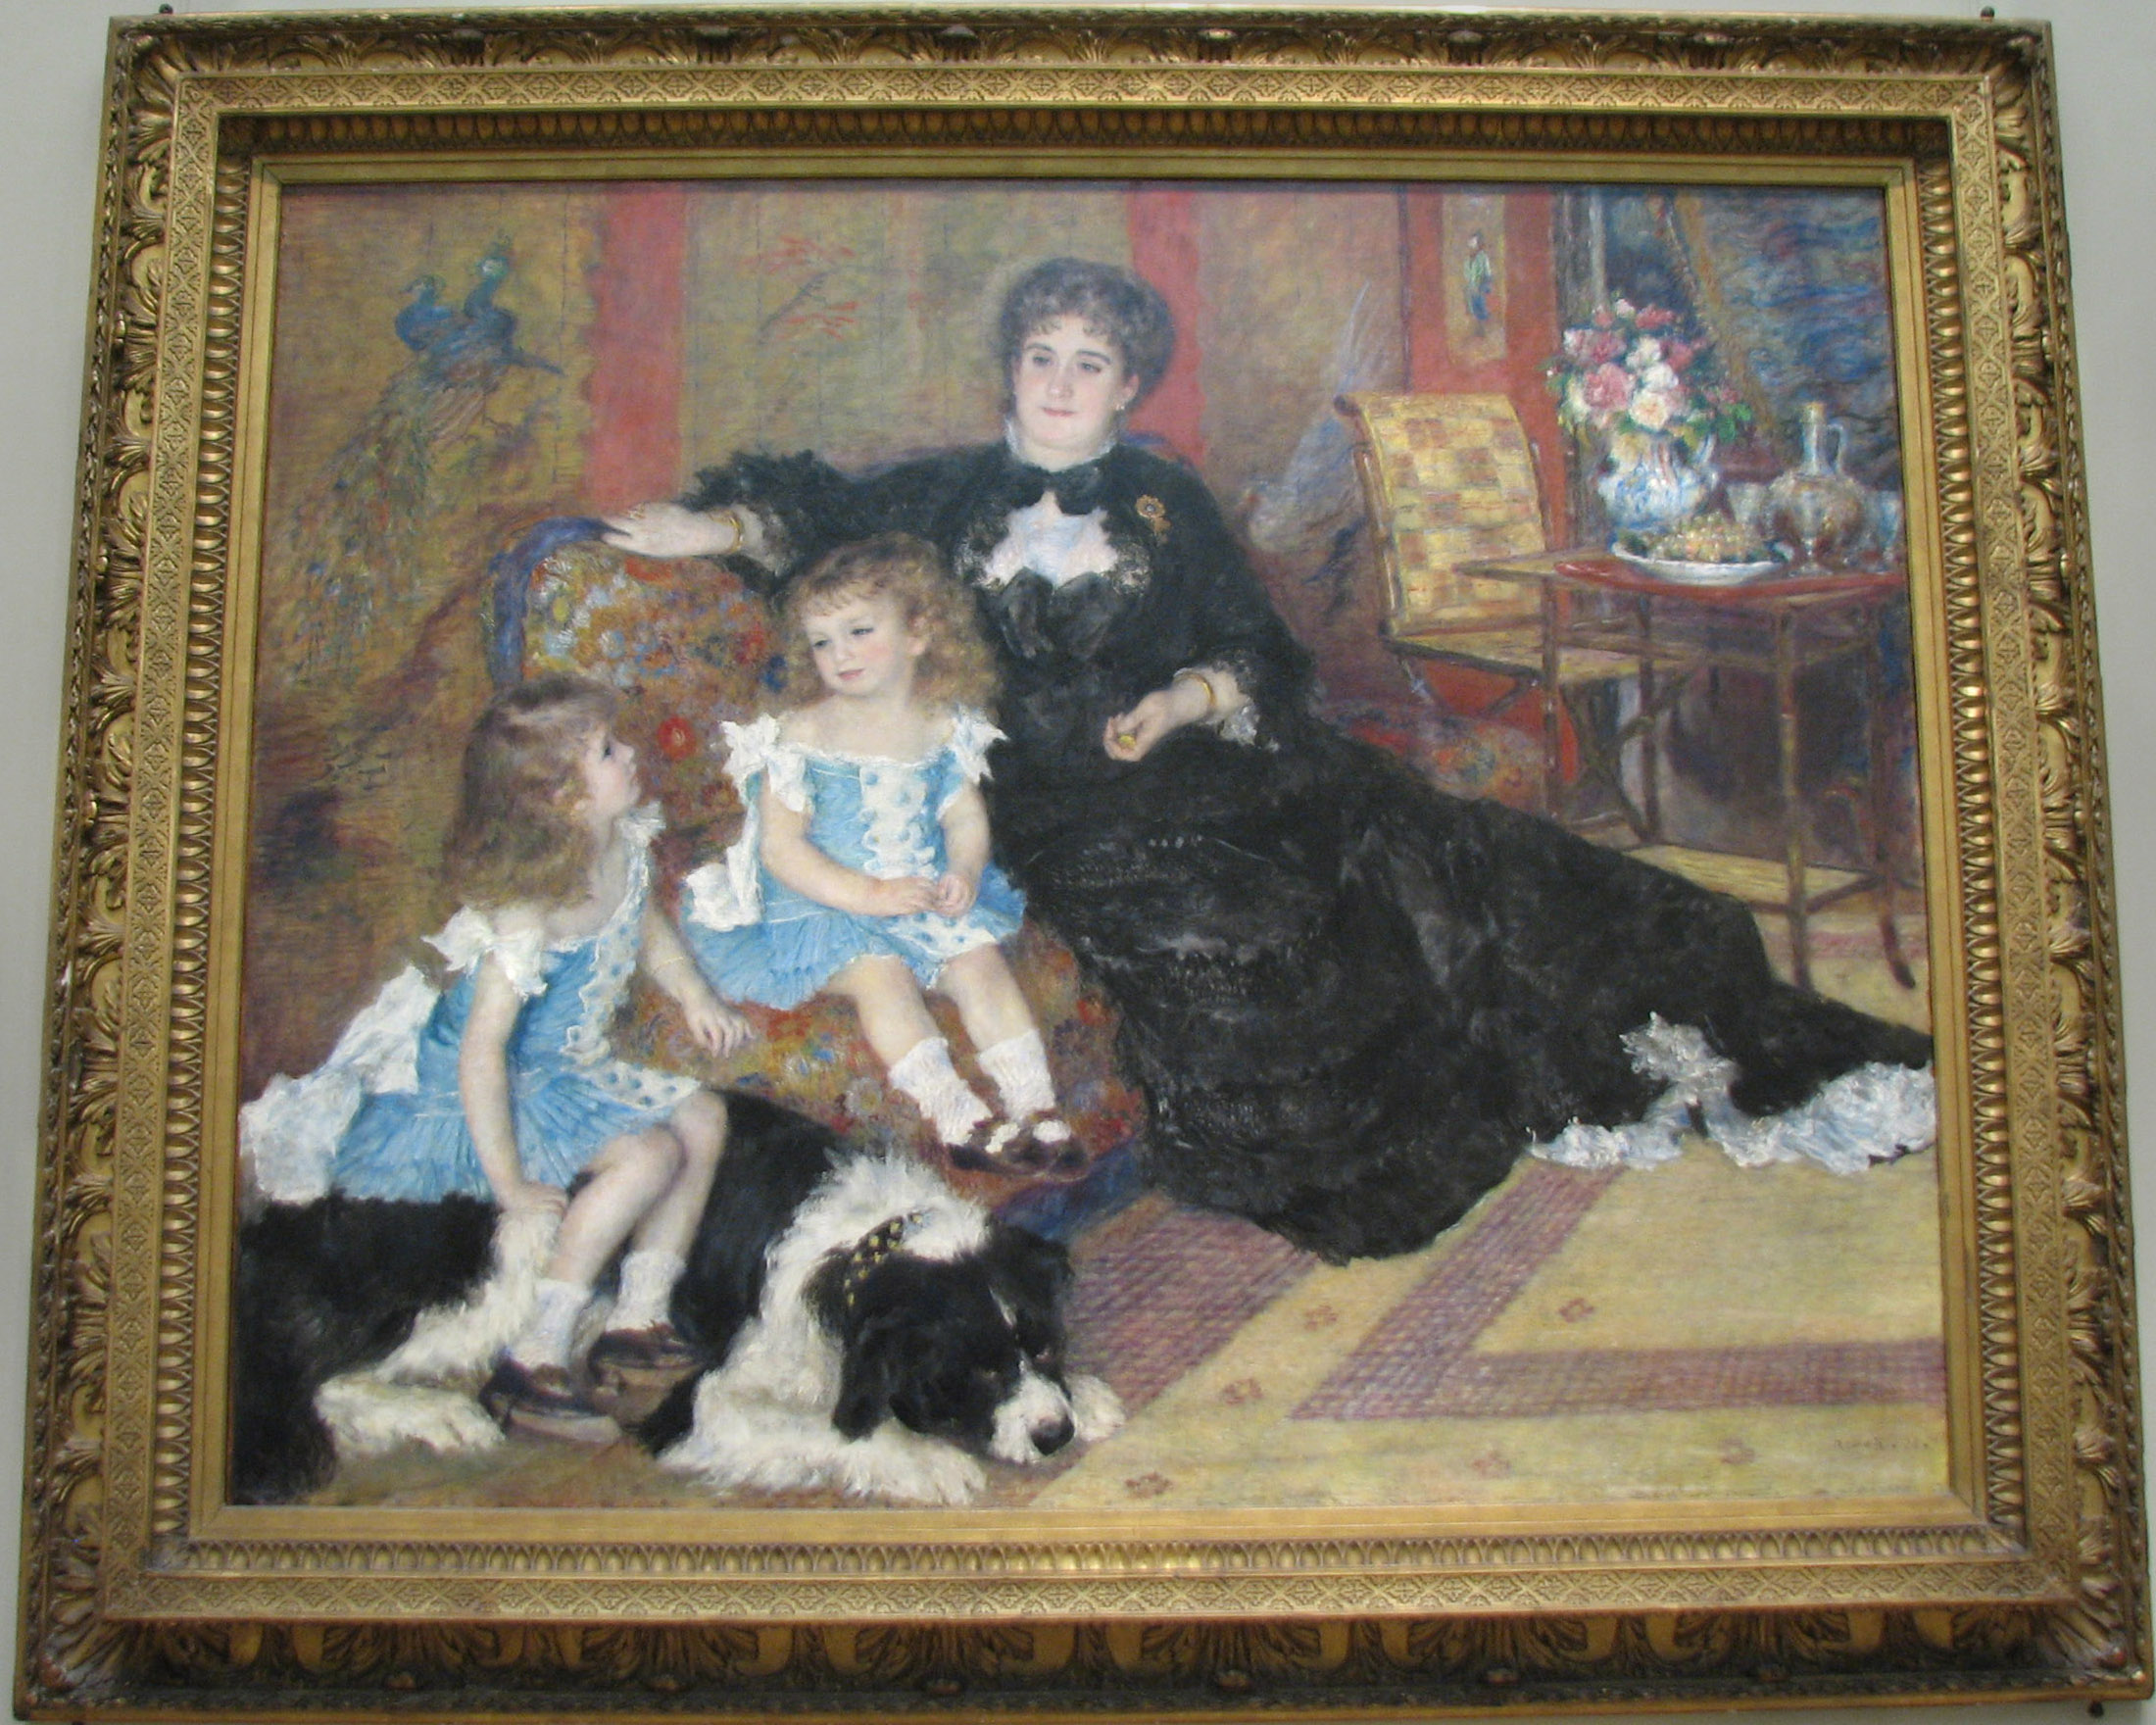 His Children [1913]